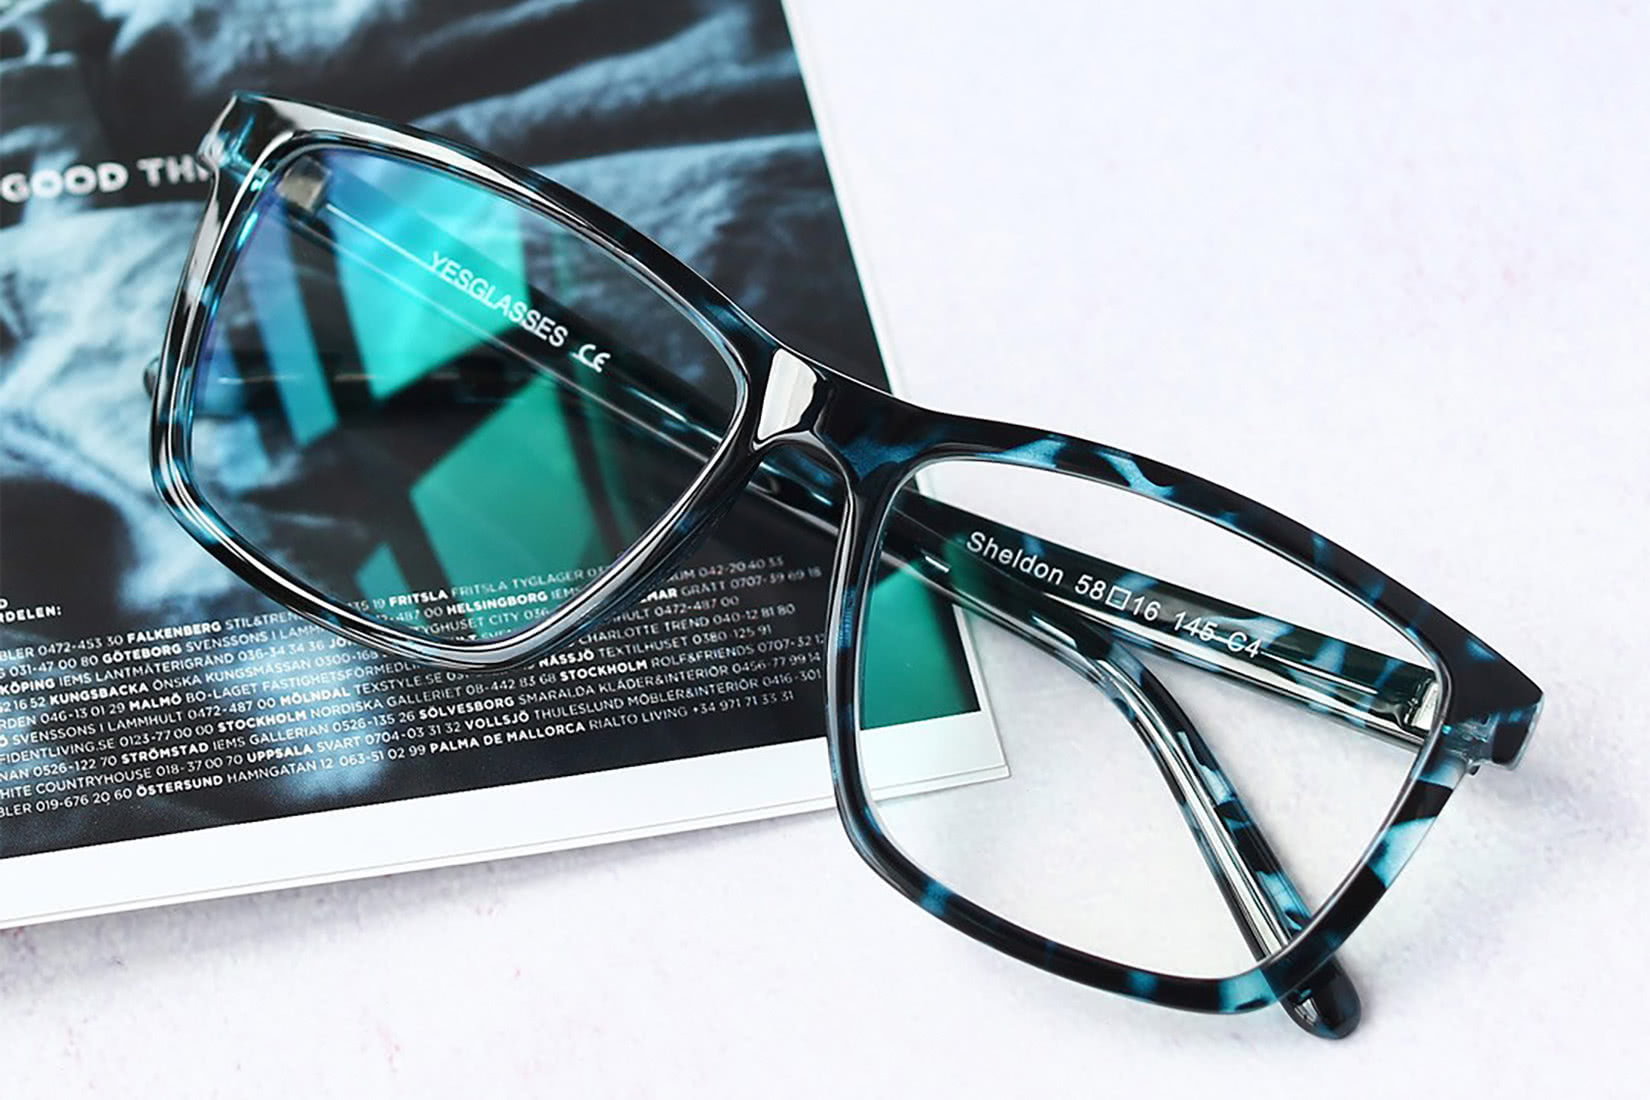 Yesglasses review men glasses - Luxe Digital